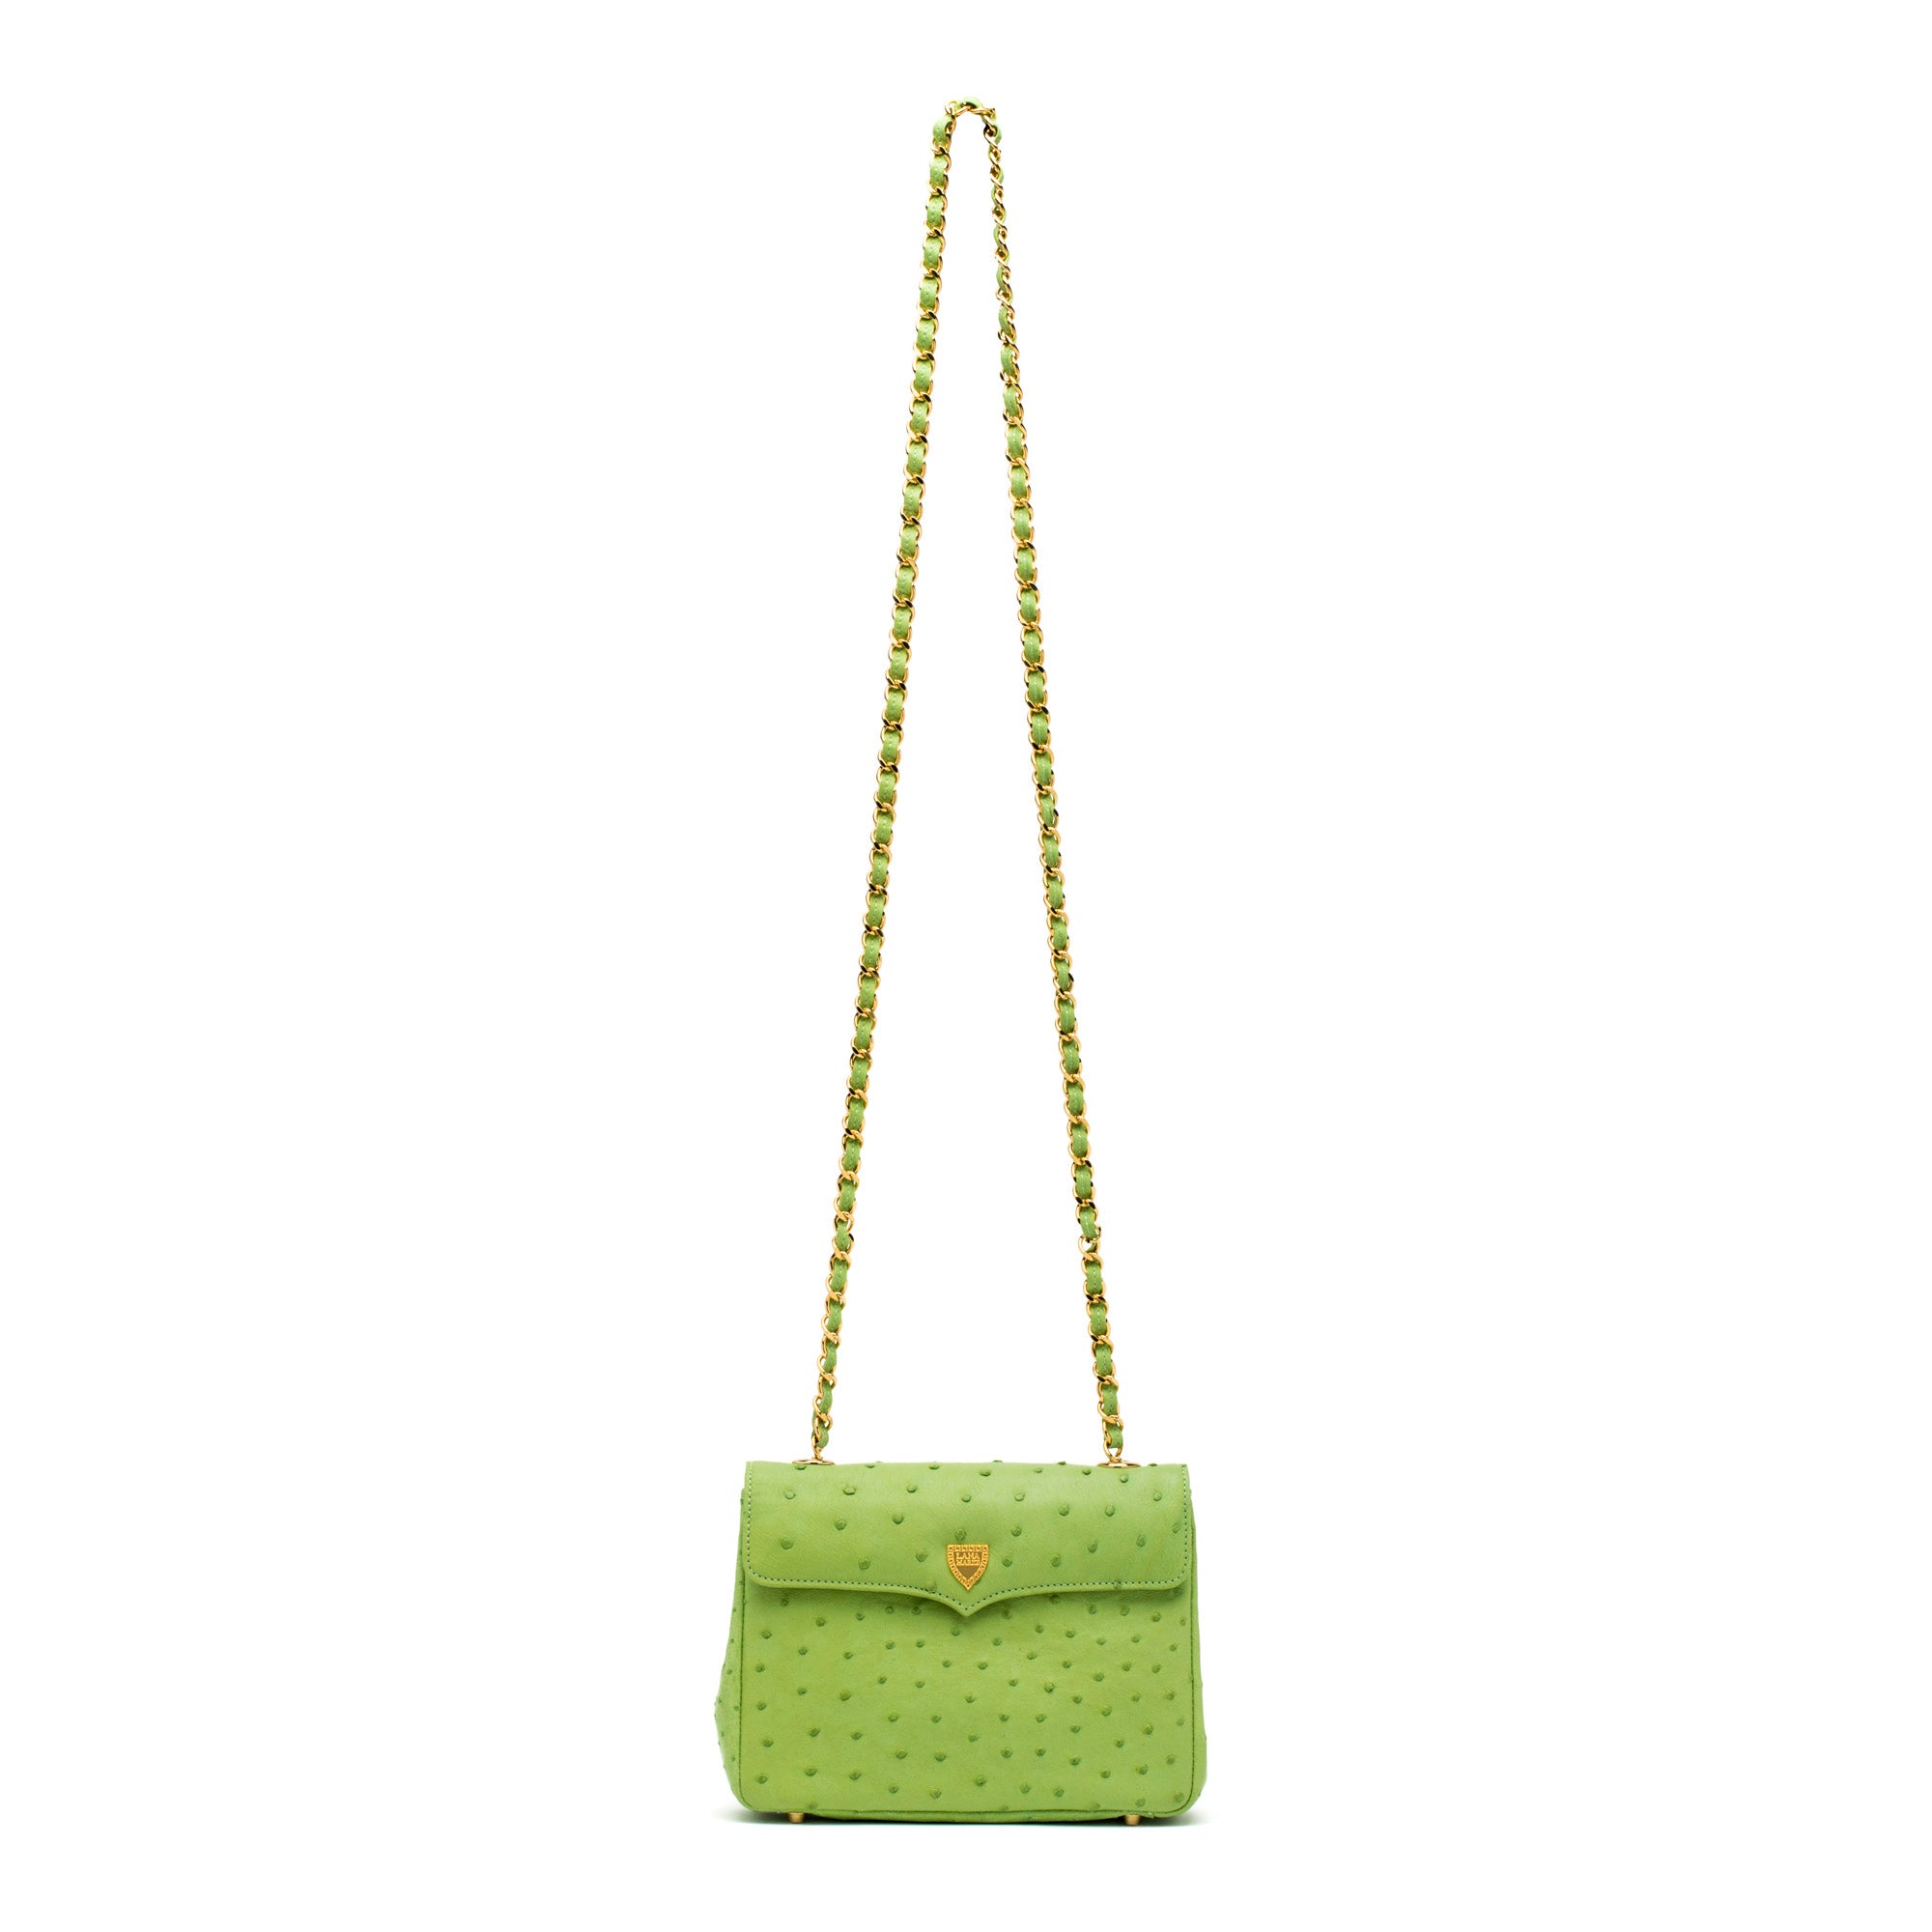 Medium Chain Bag in Lime Green